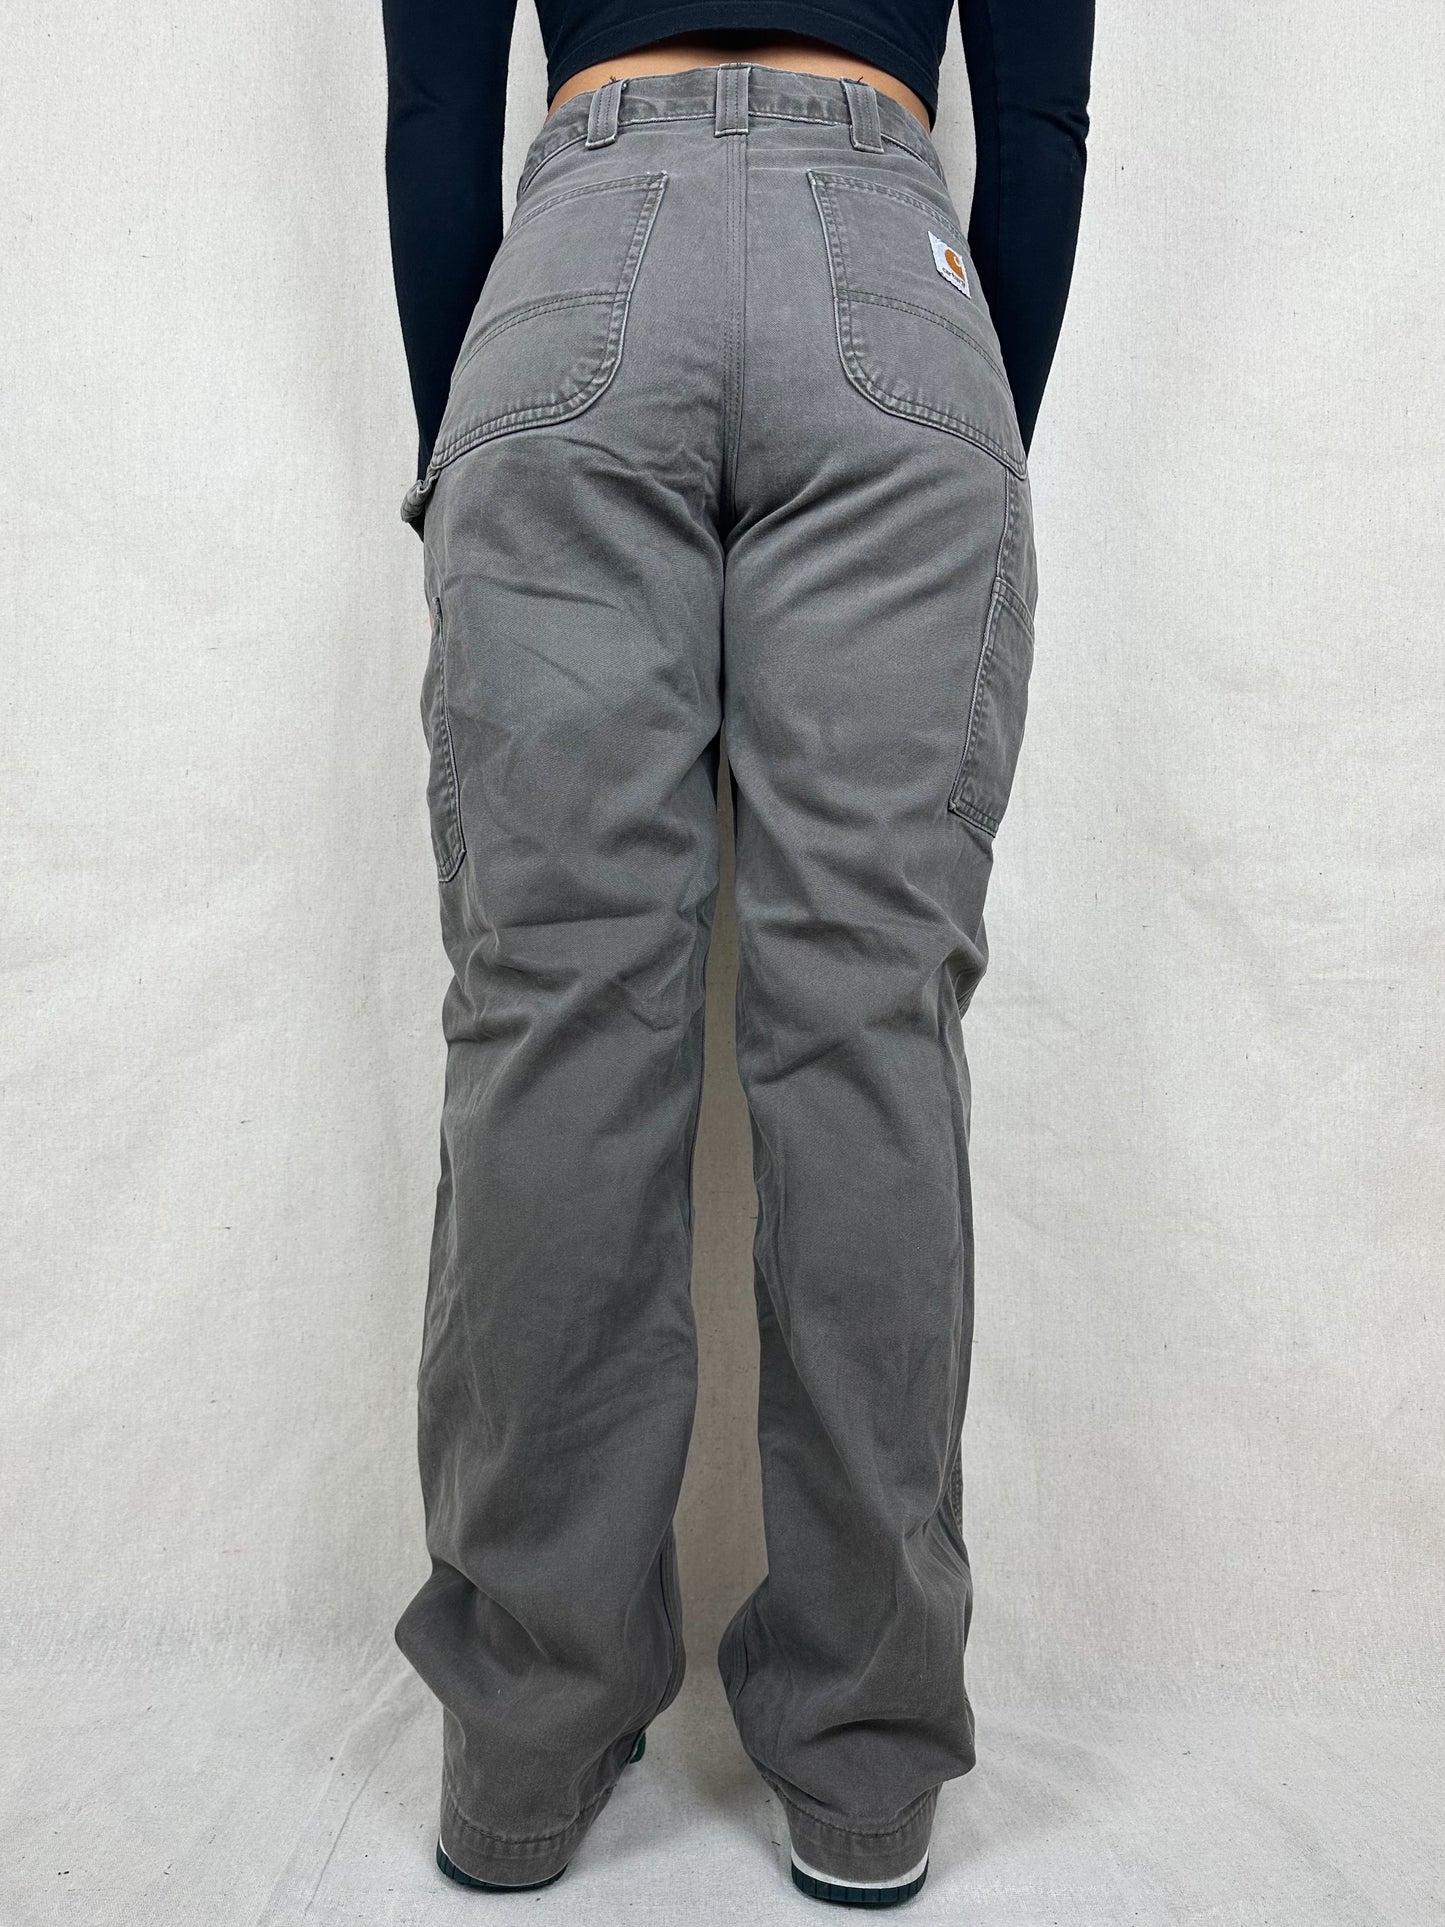 90's Carhartt Vintage Pants Size 30x30